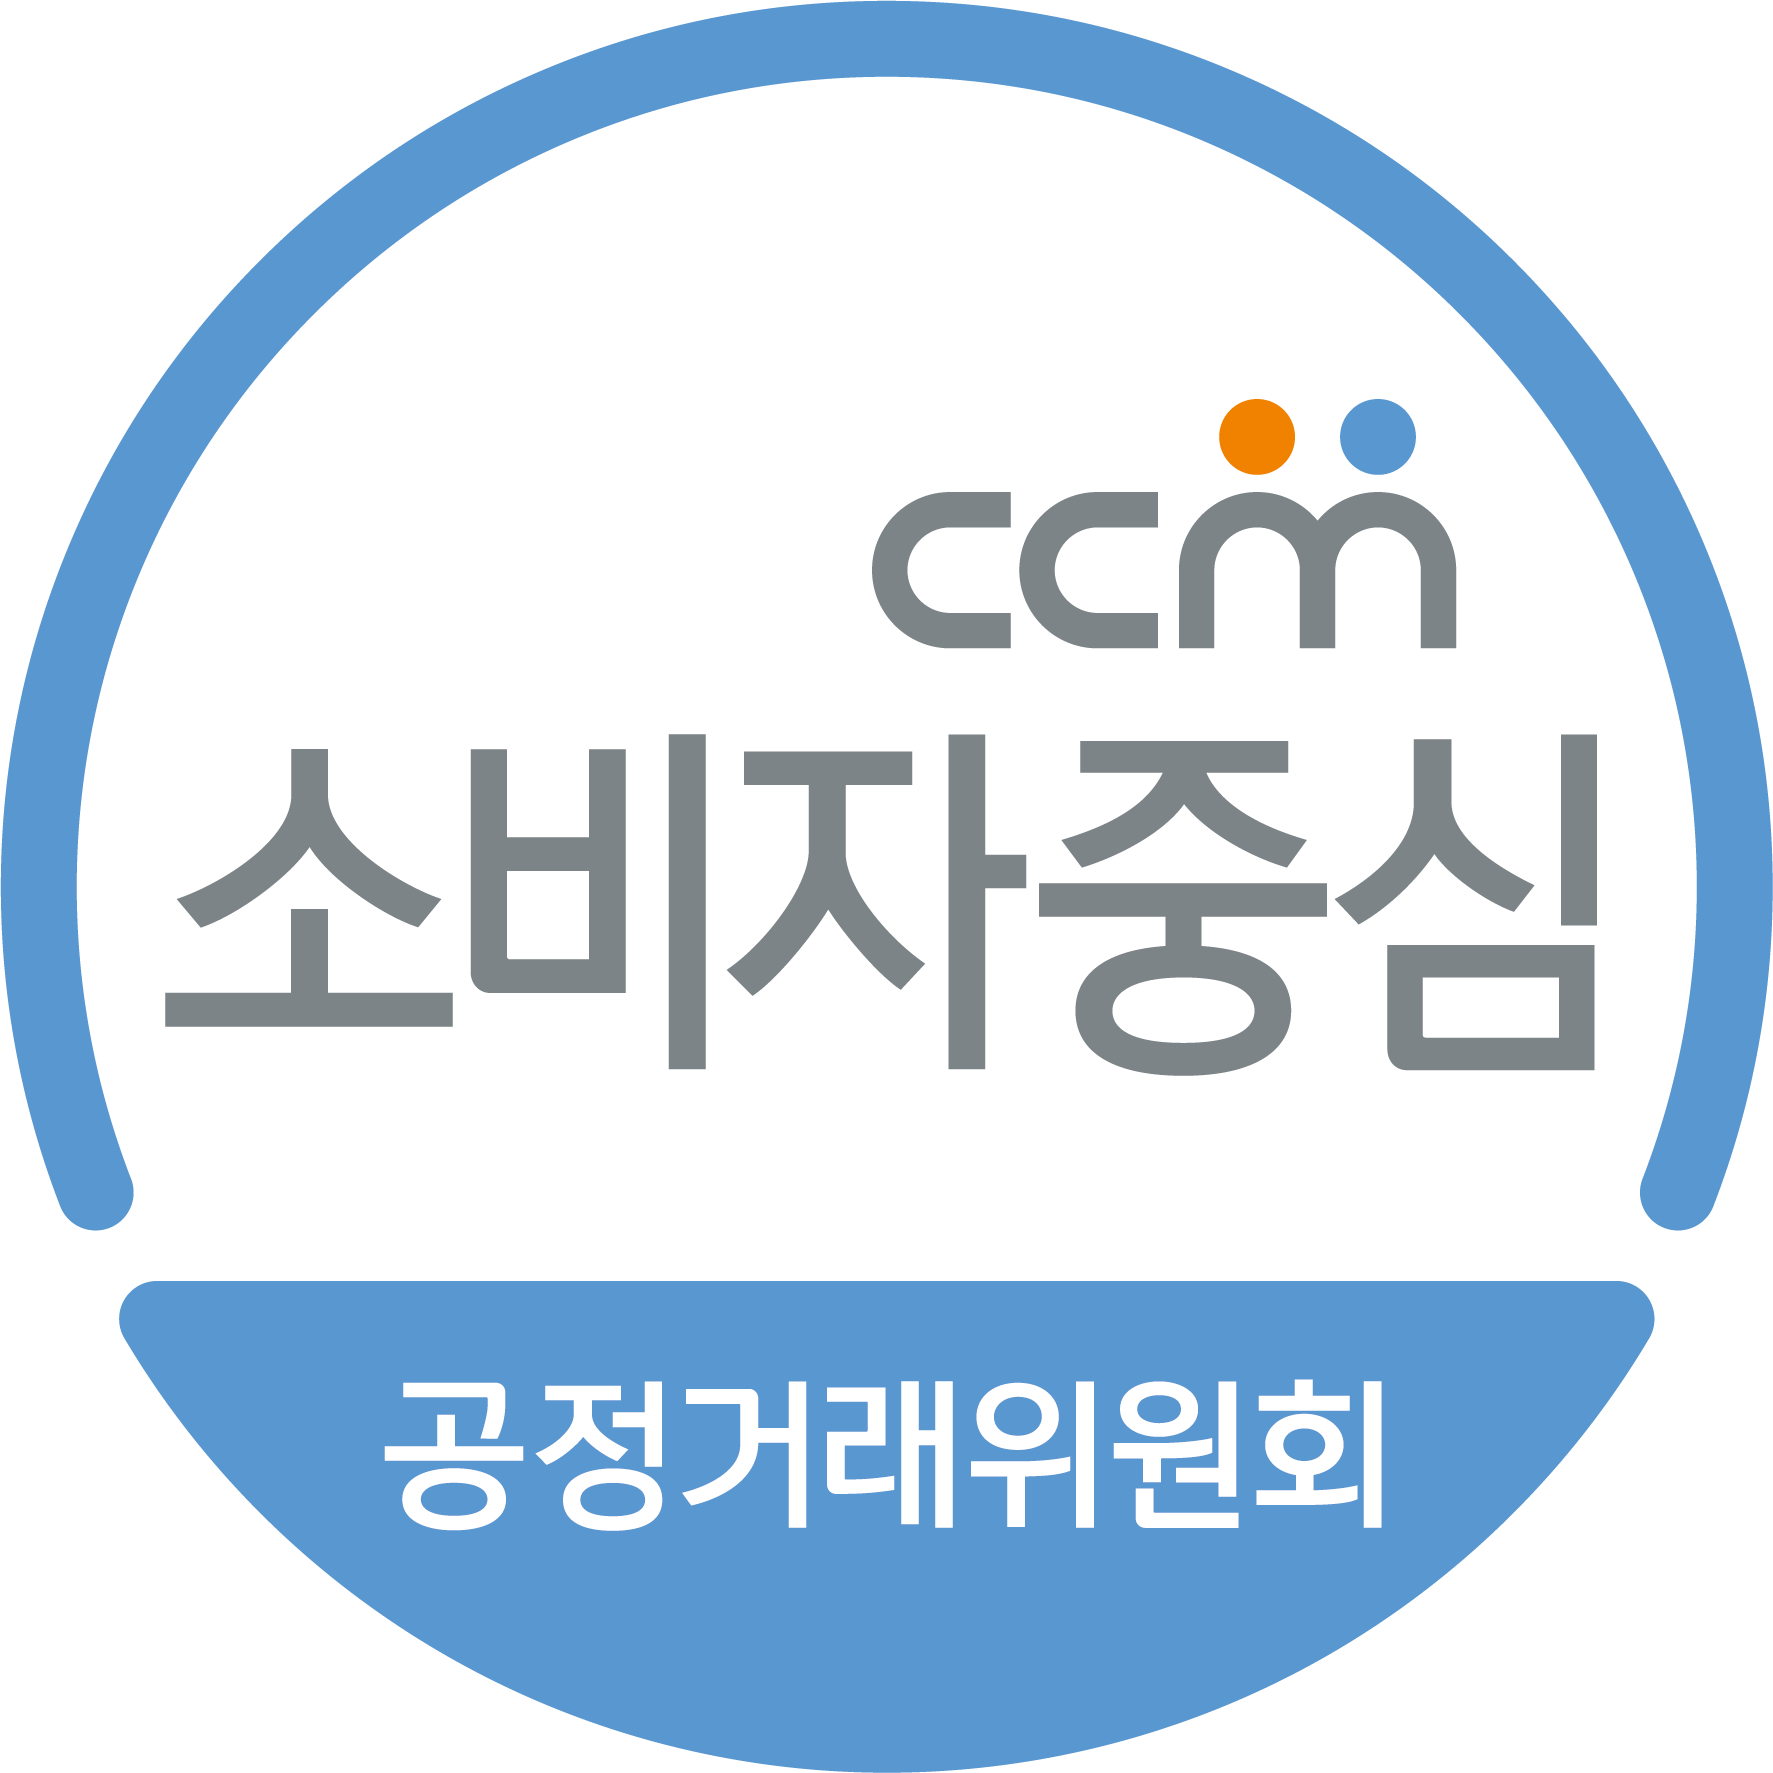 CCM(소비자중심경영) 인증마크